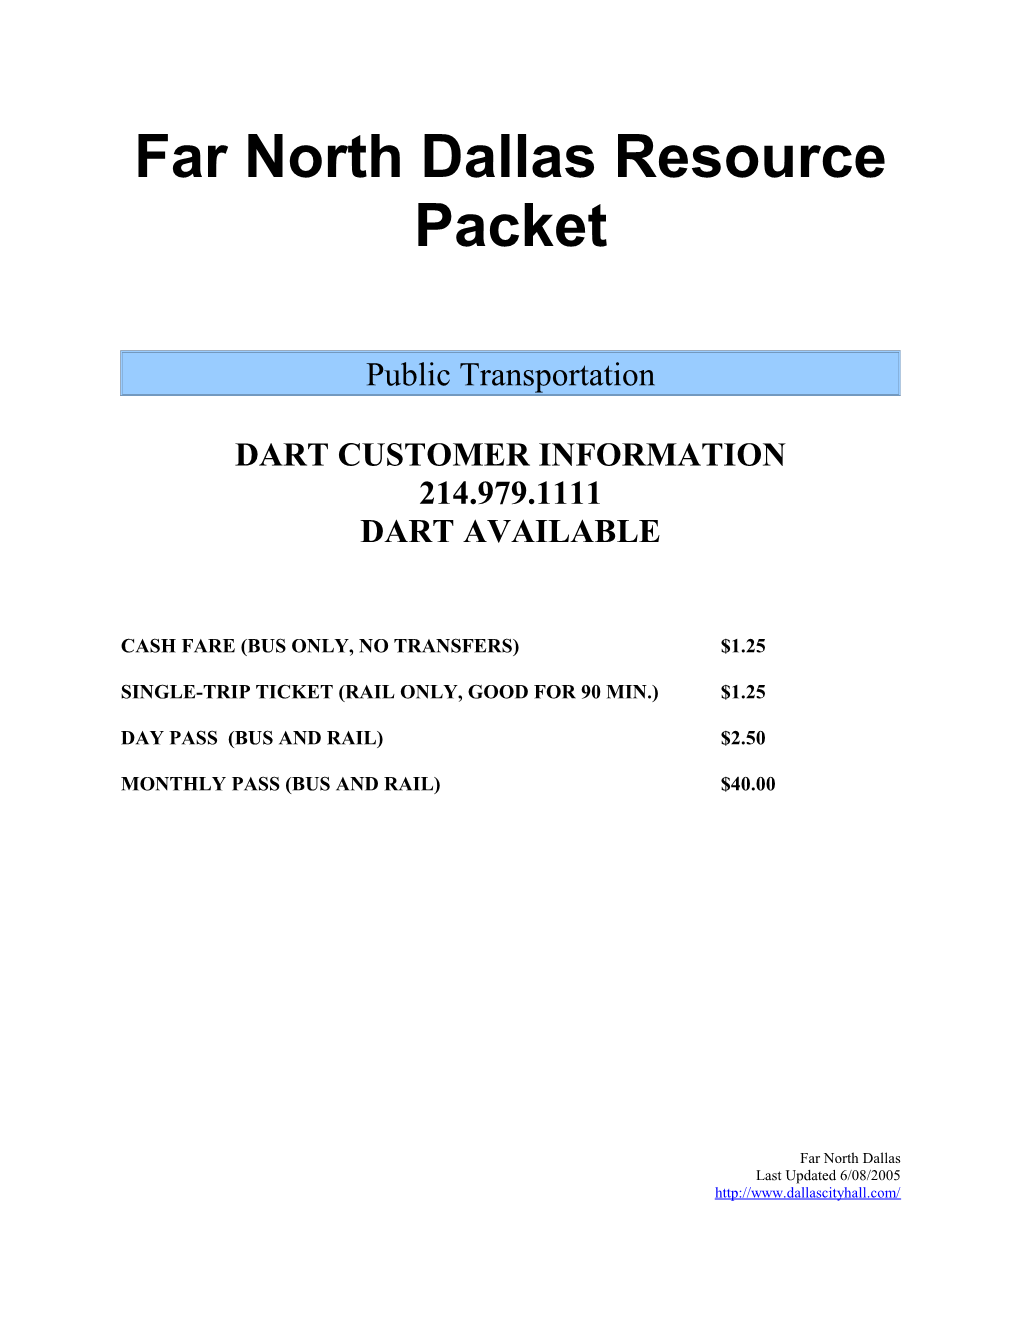 Far North Dallas Resource Packet